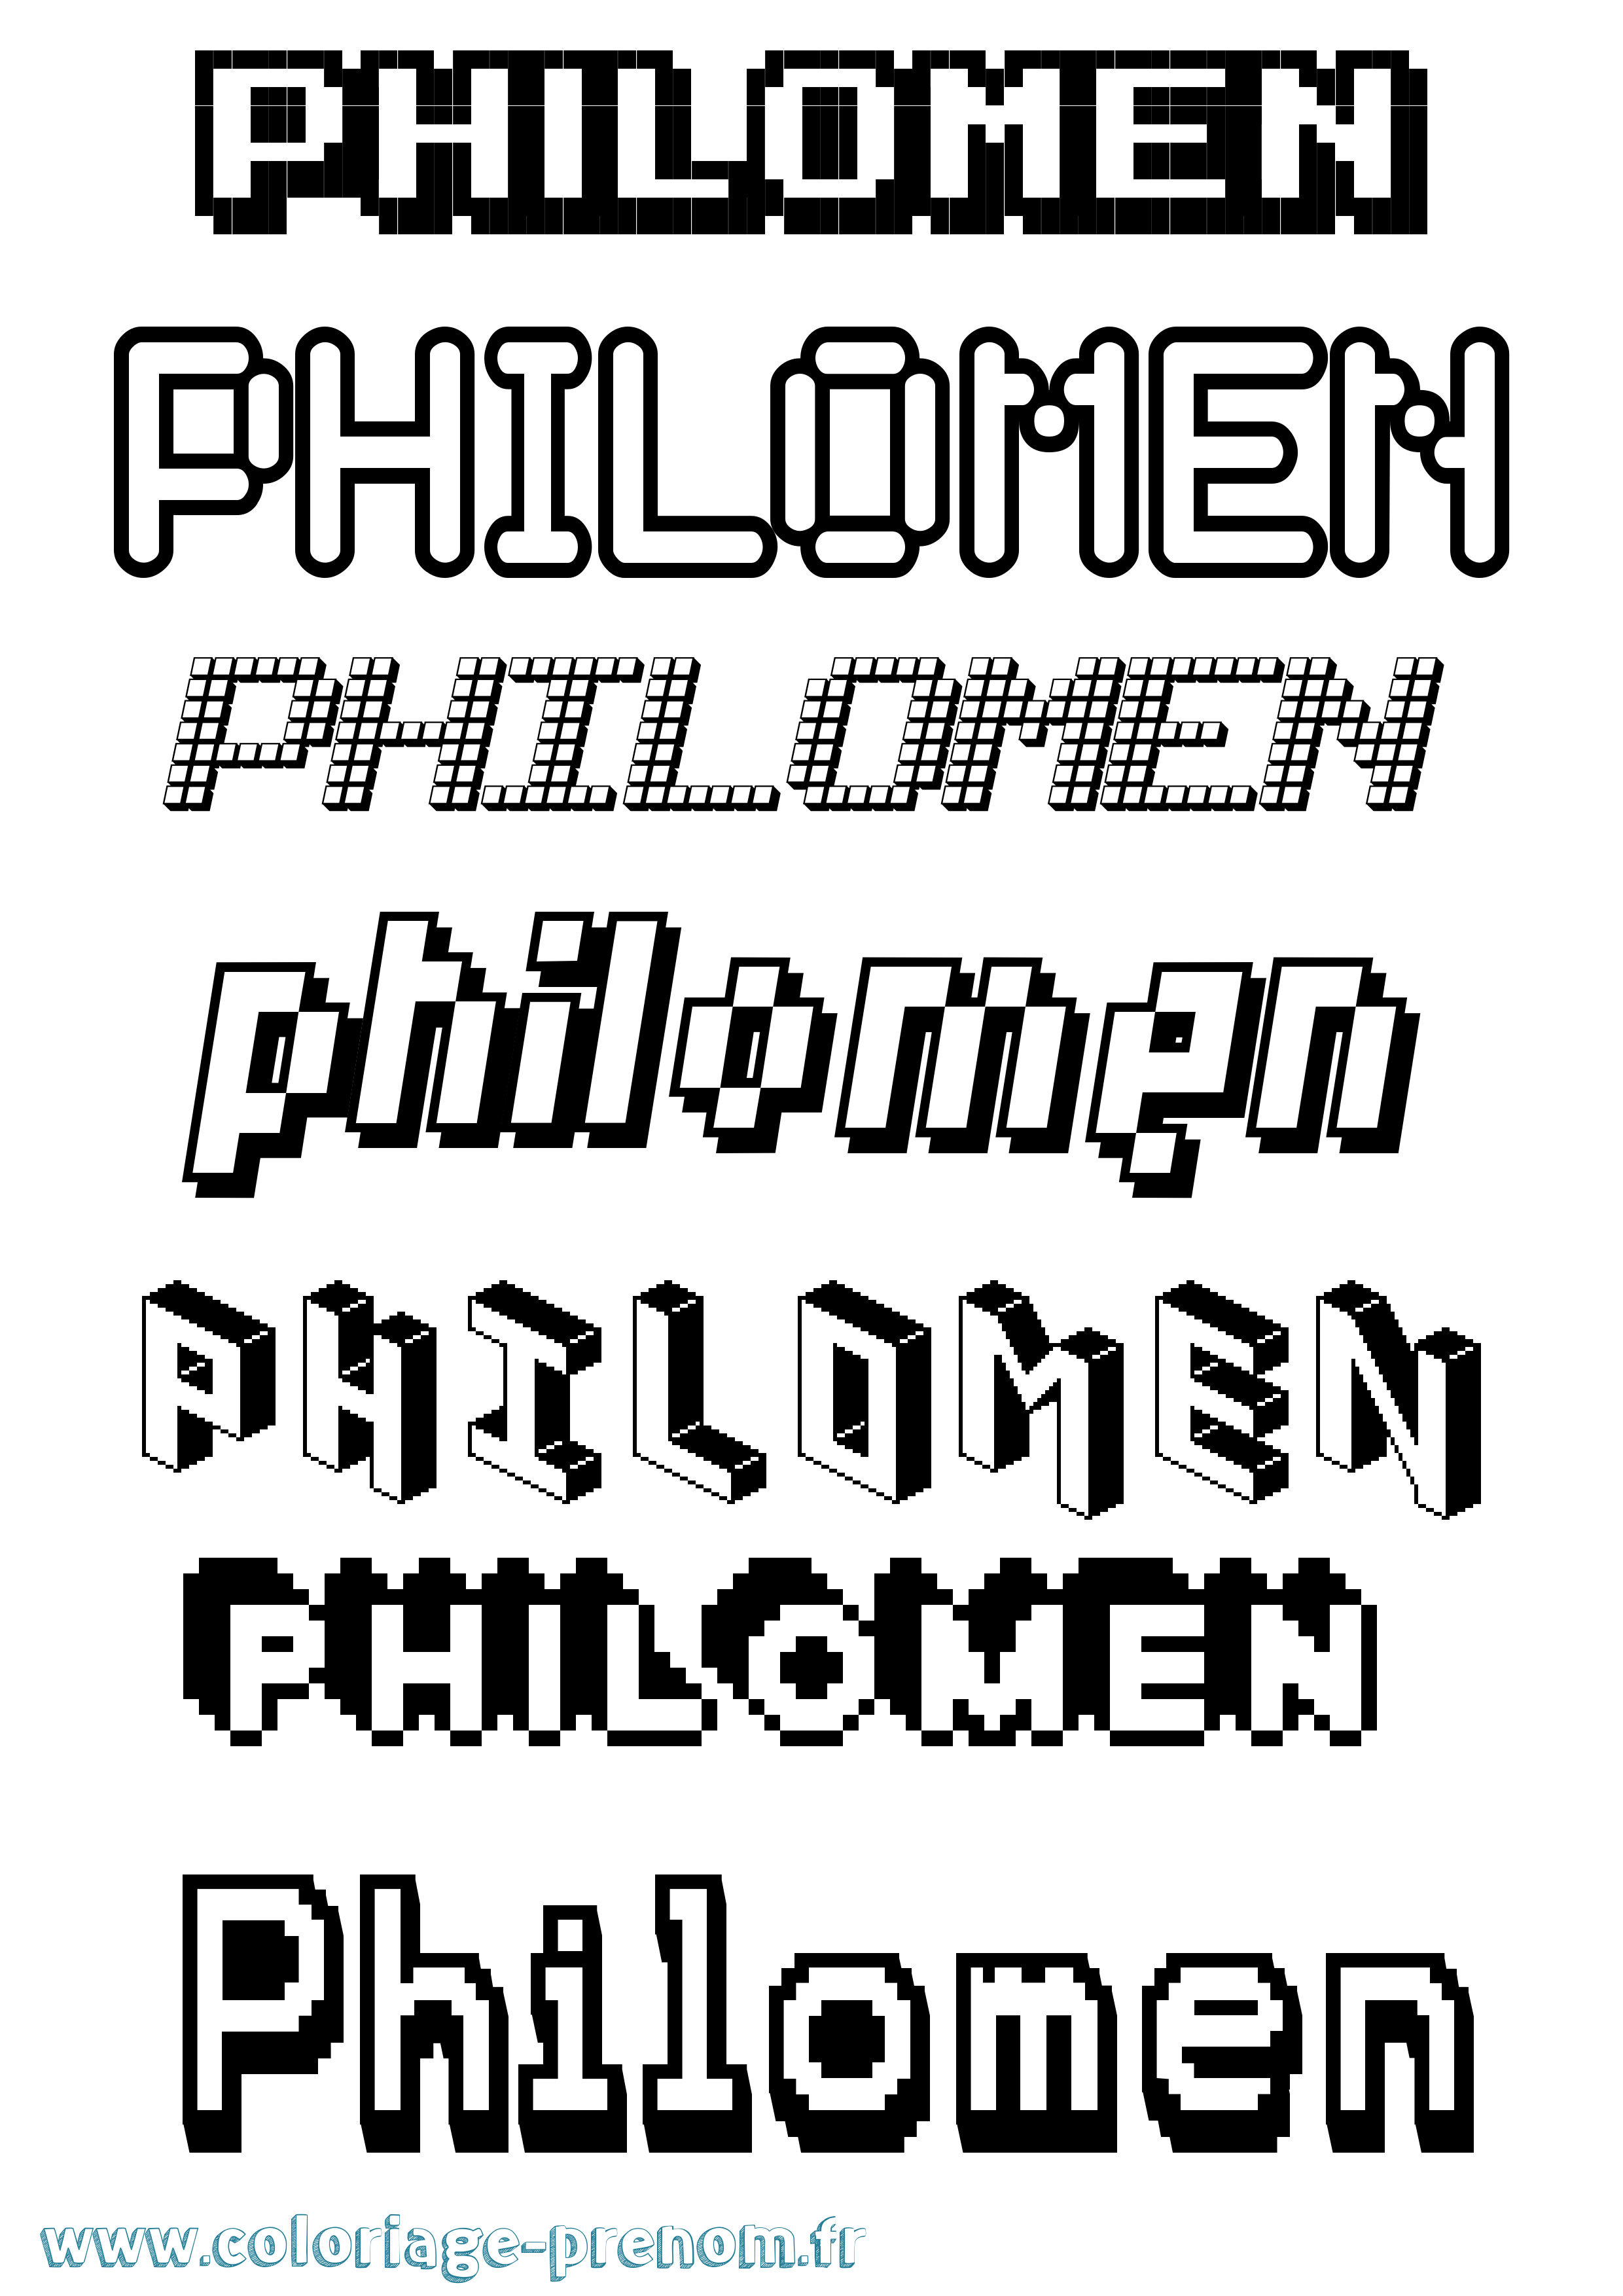 Coloriage prénom Philomen Pixel